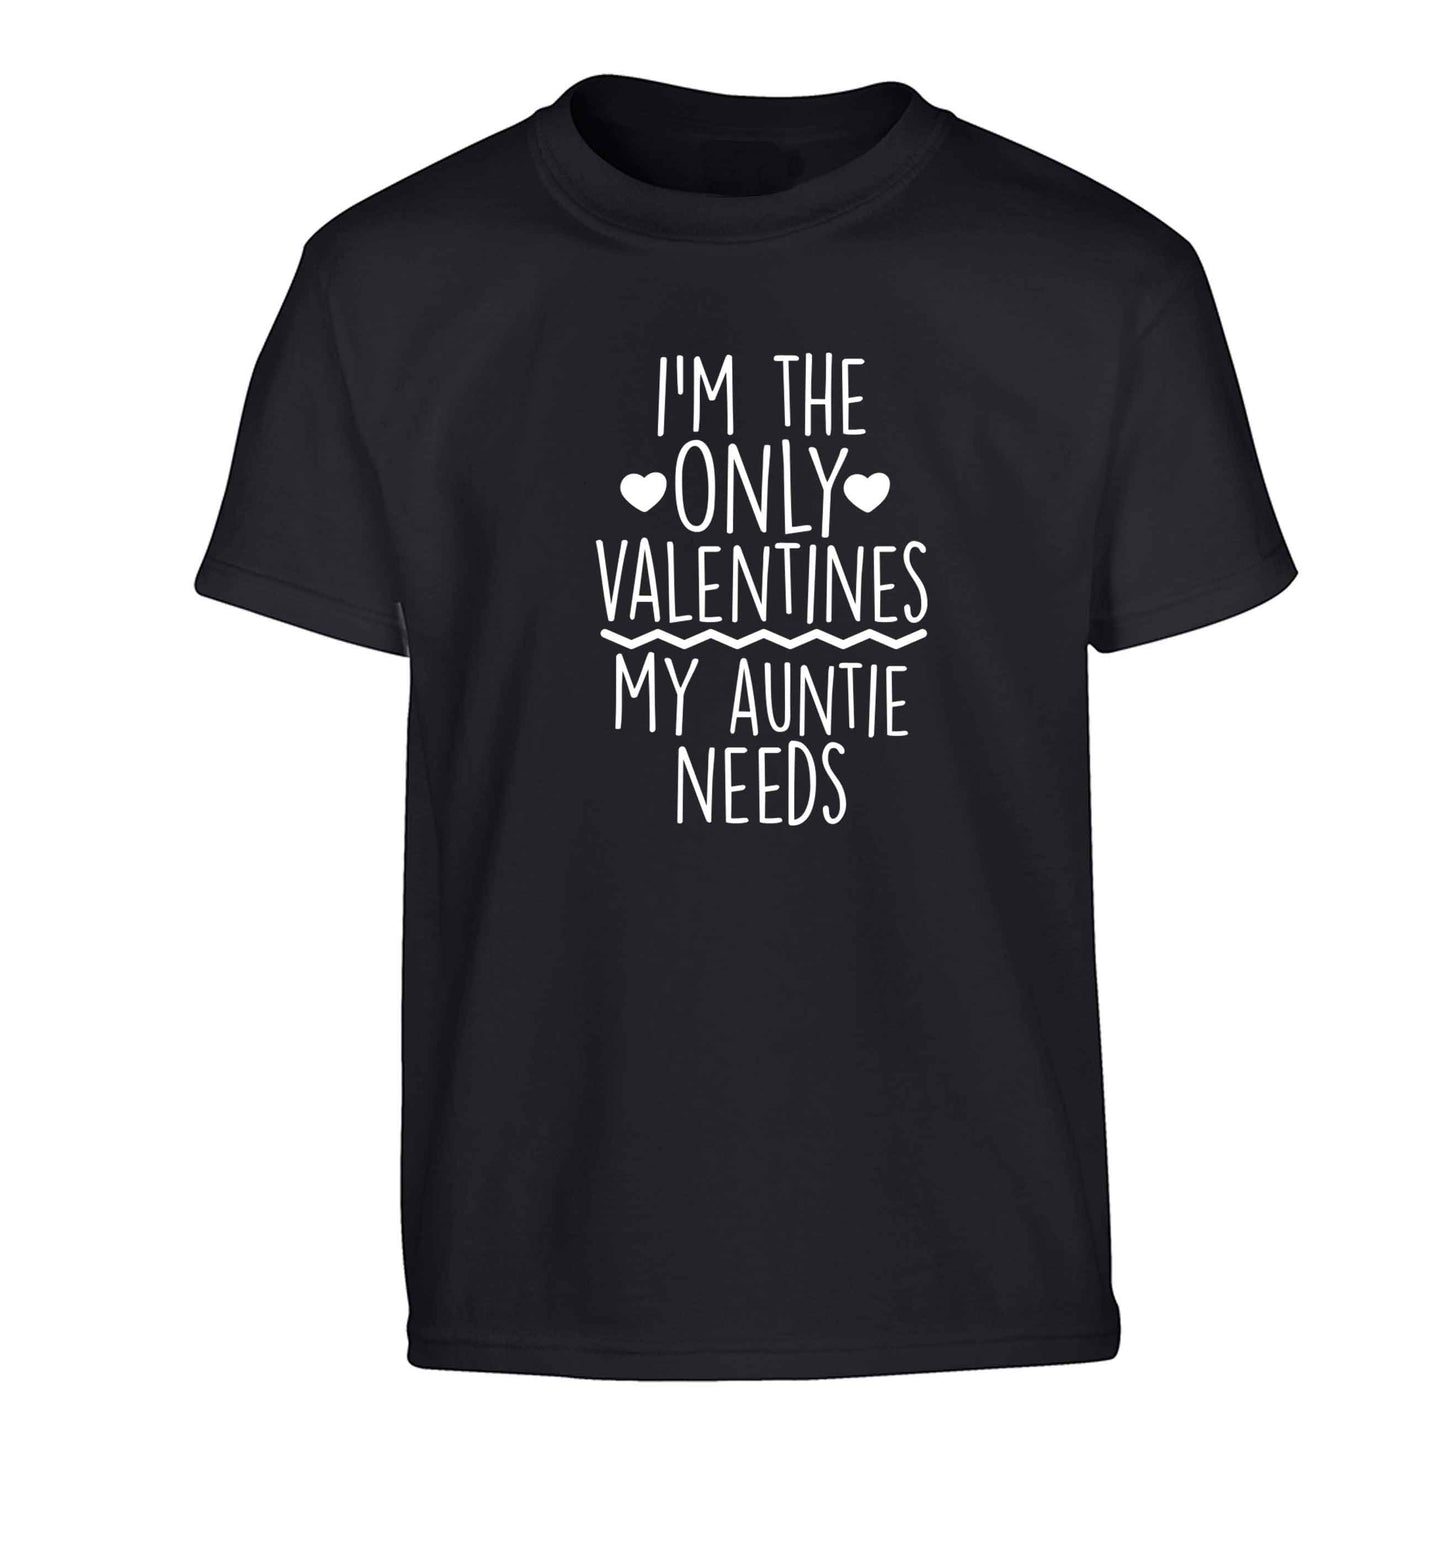 I'm the only valentines my auntie needs Children's black Tshirt 12-13 Years